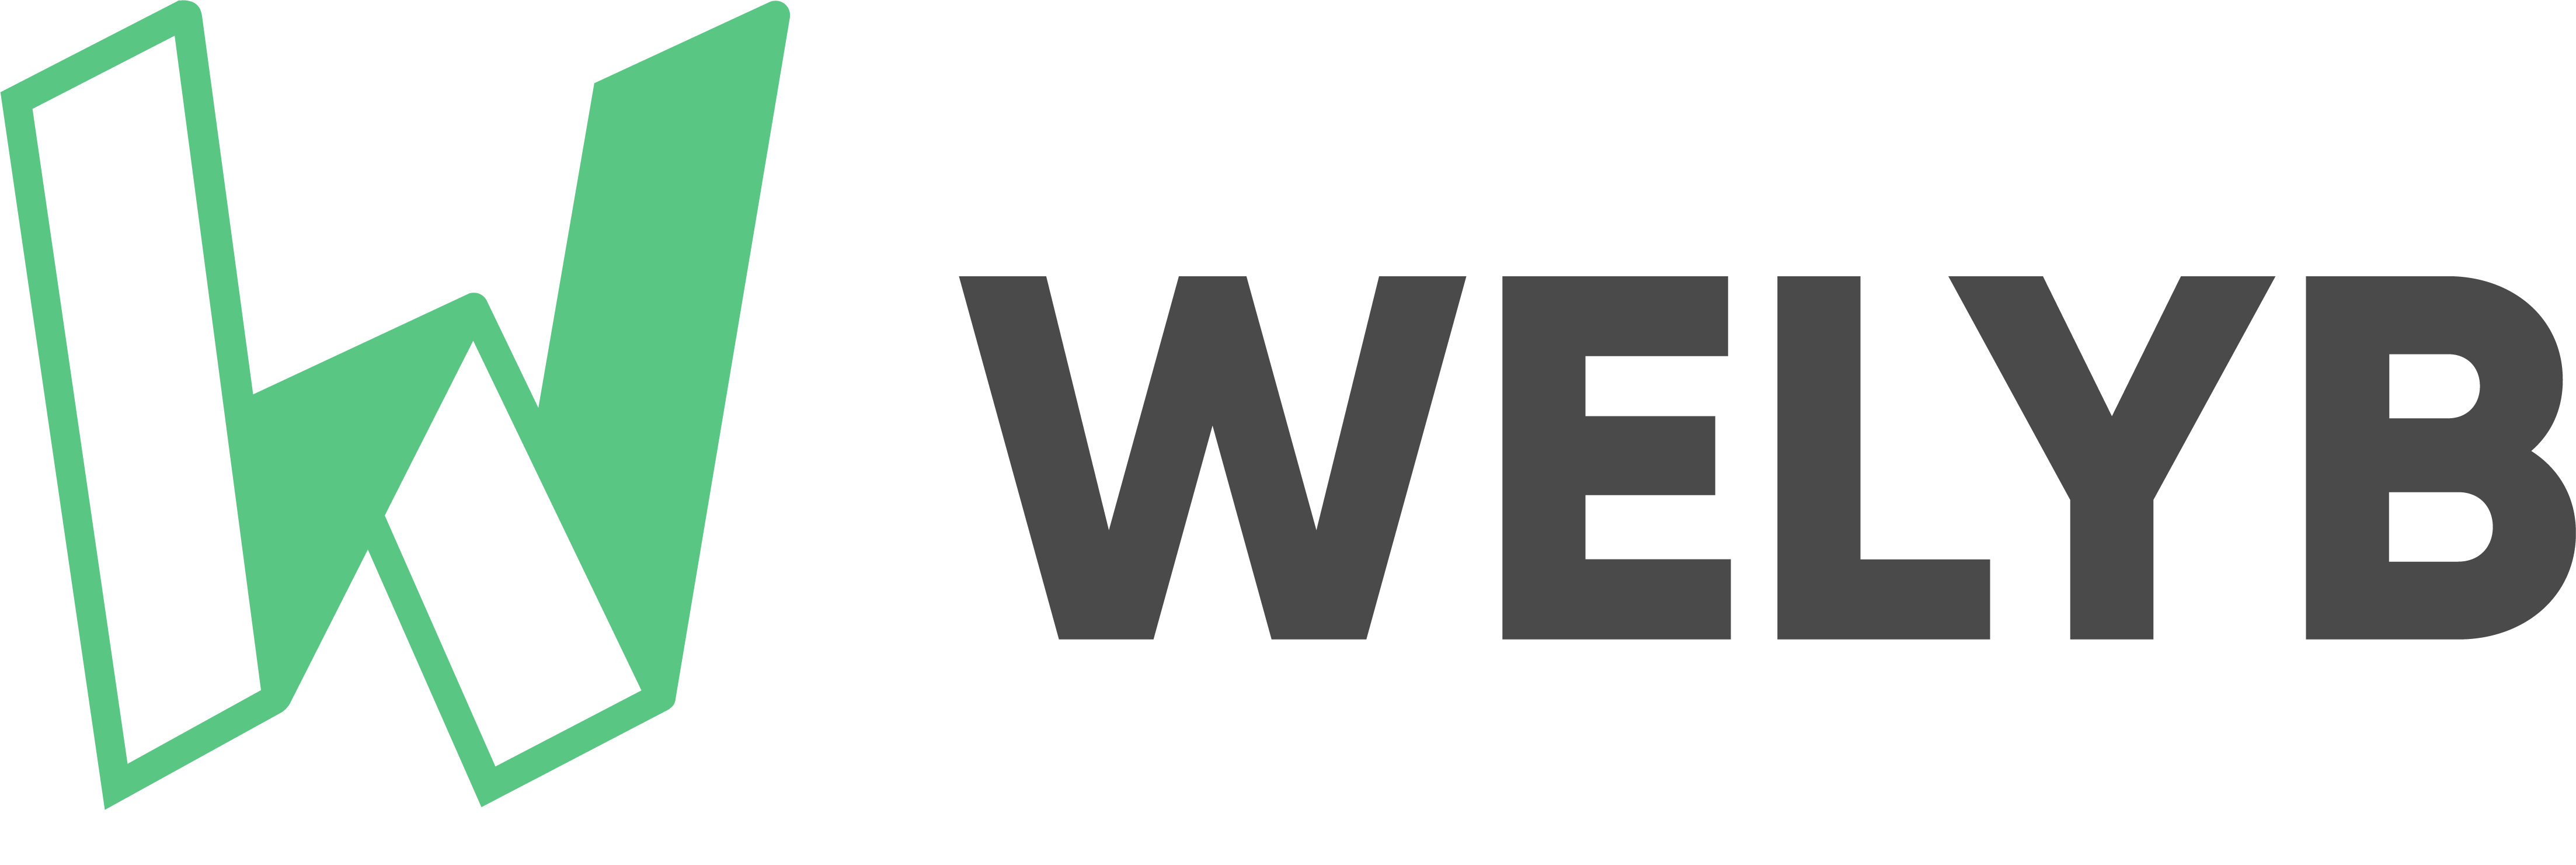 welyb-logo